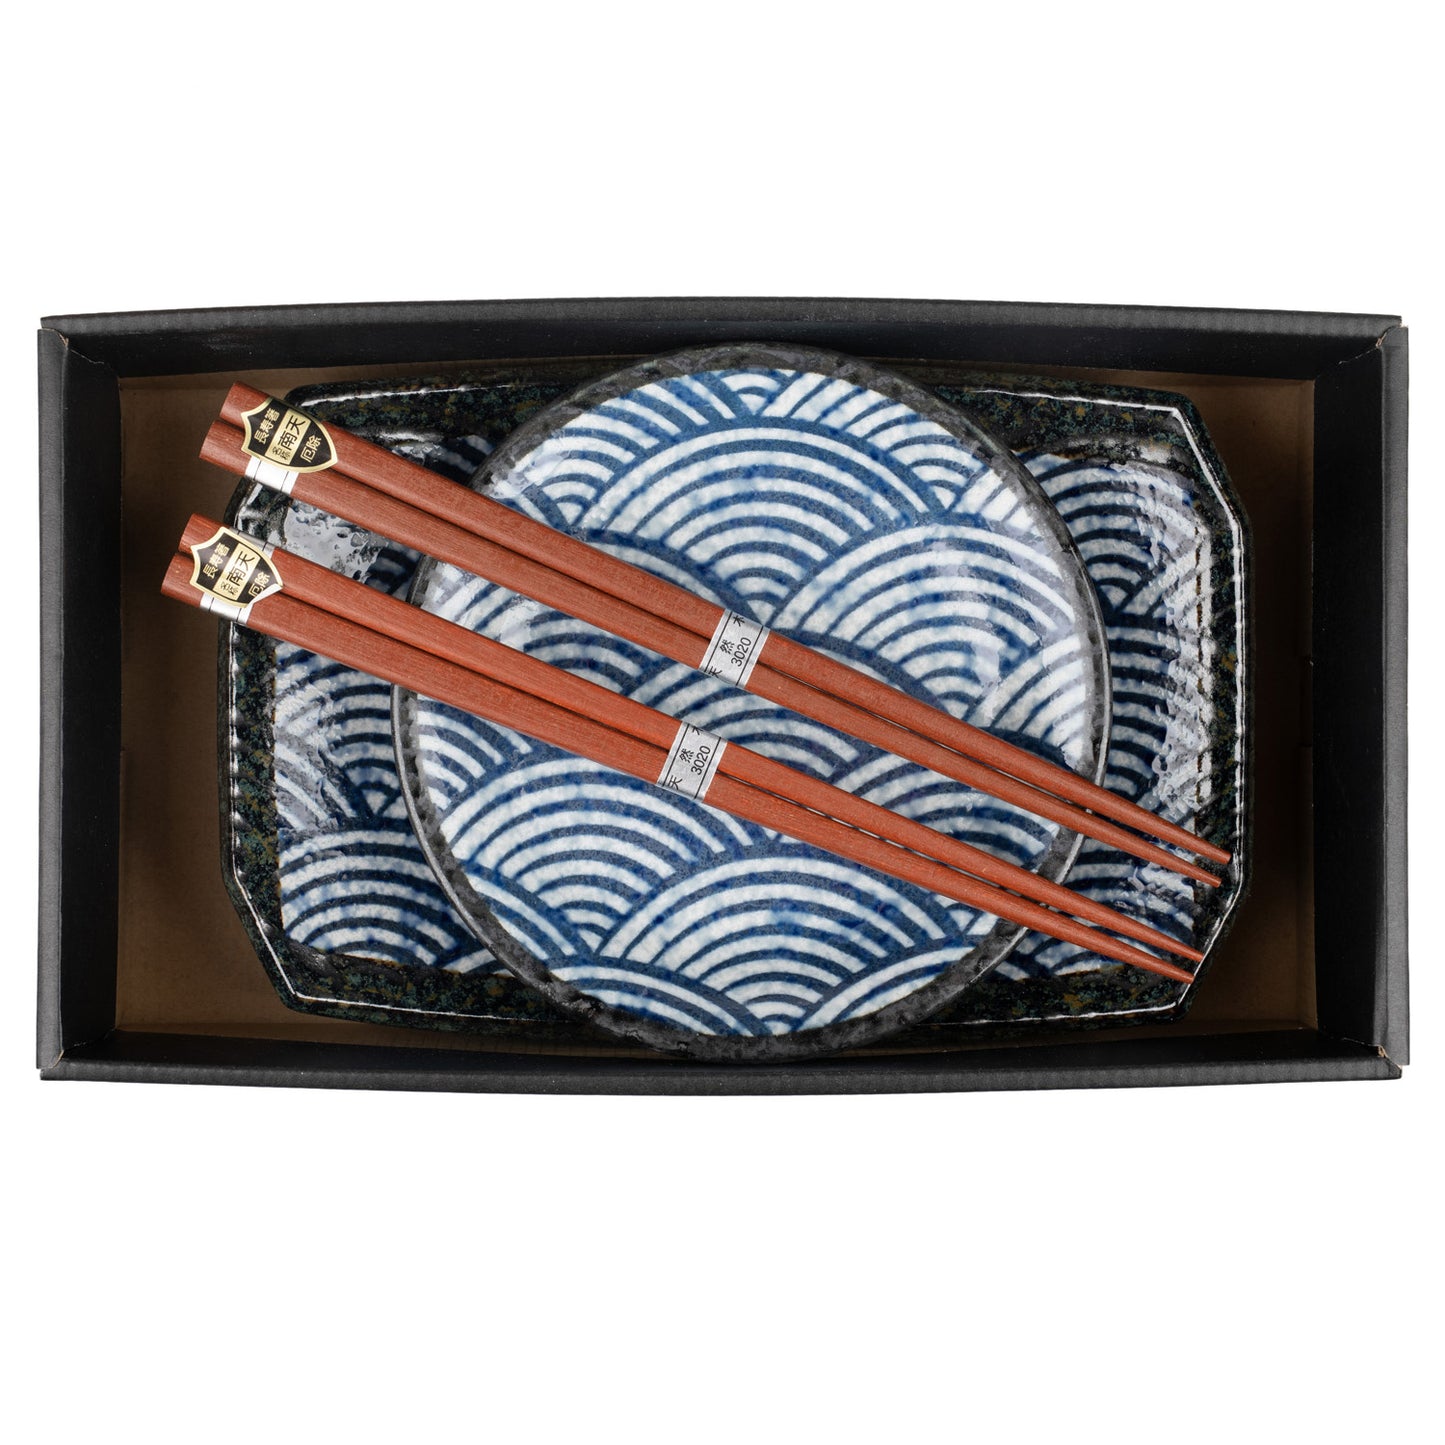 New Seikaha Oblong Japanese Sushi Gift Set in gift box